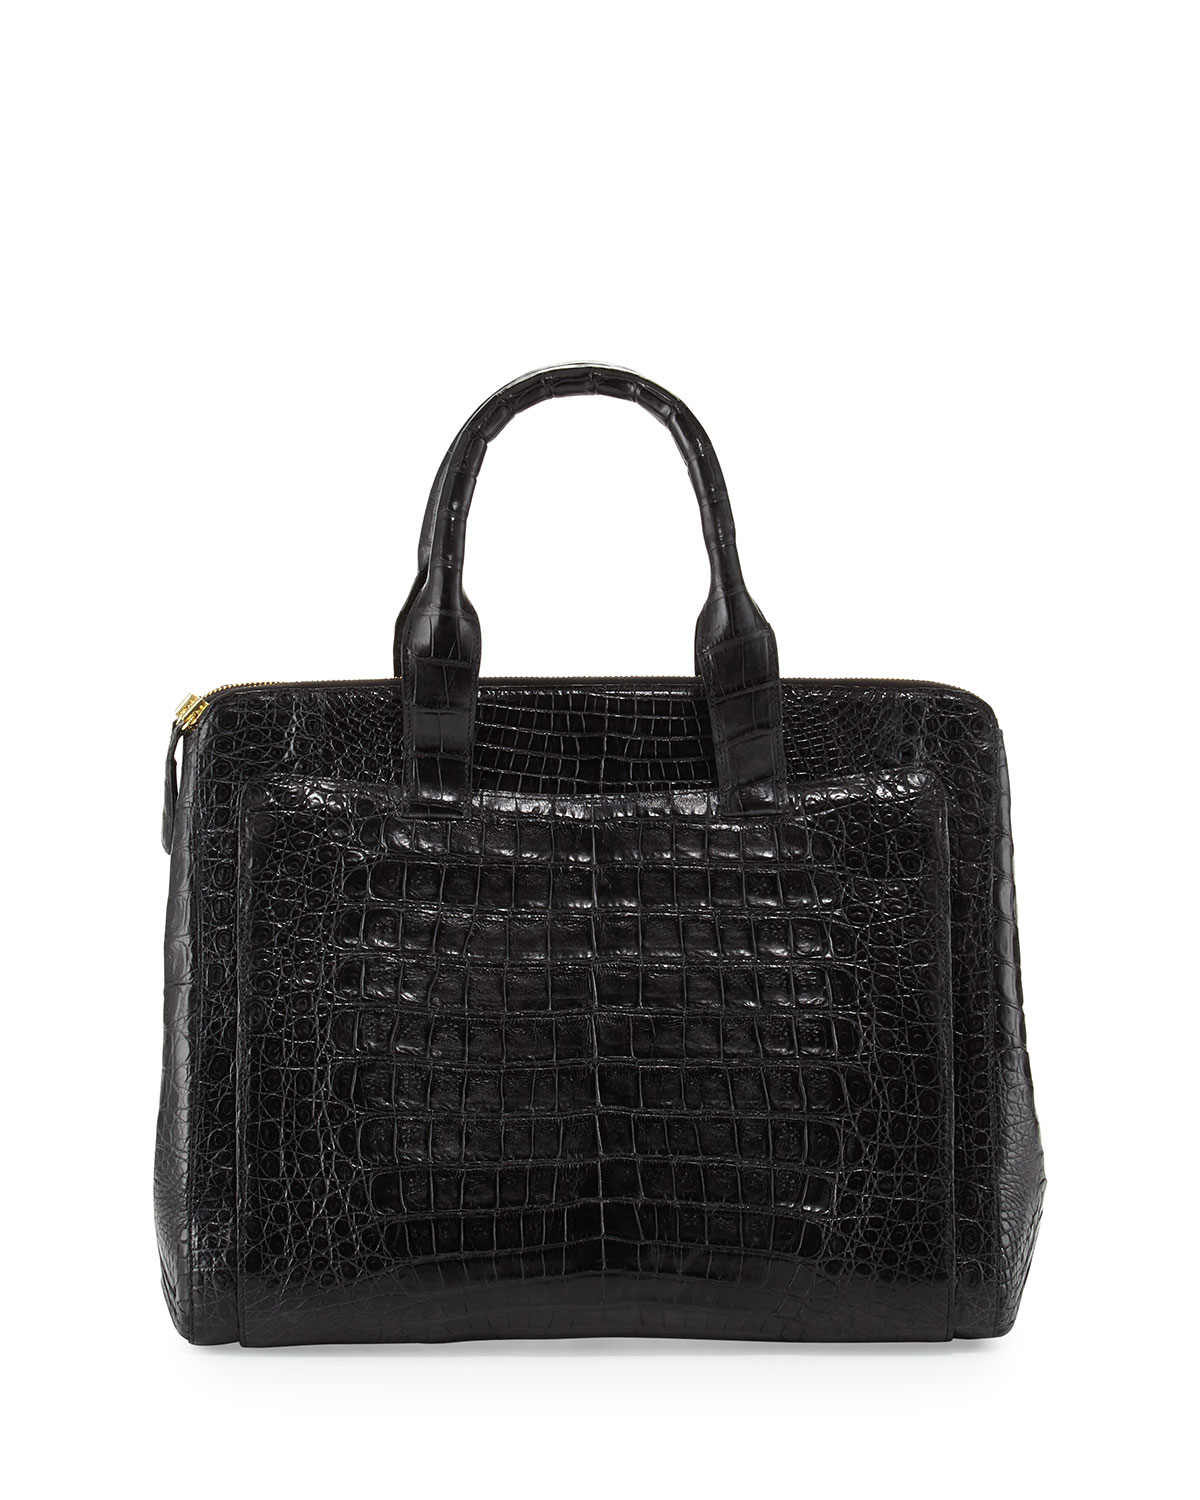 Lyst - Nancy Gonzalez Crocodile Large Zip Tote Bag in Black